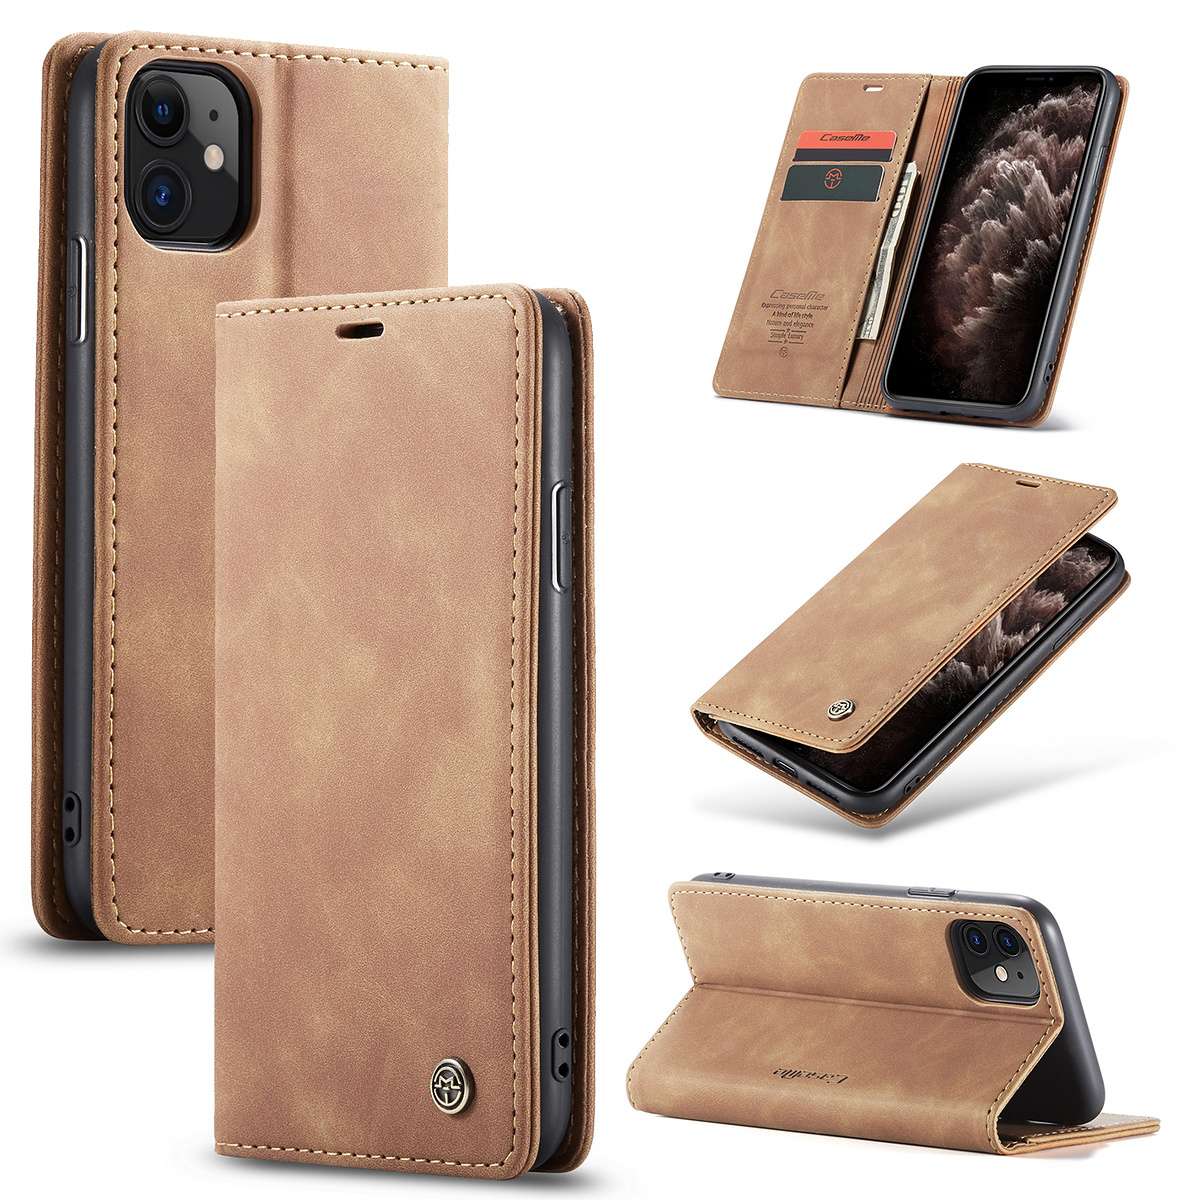 CaseMe plånboksfodral, iPhone 11, brun